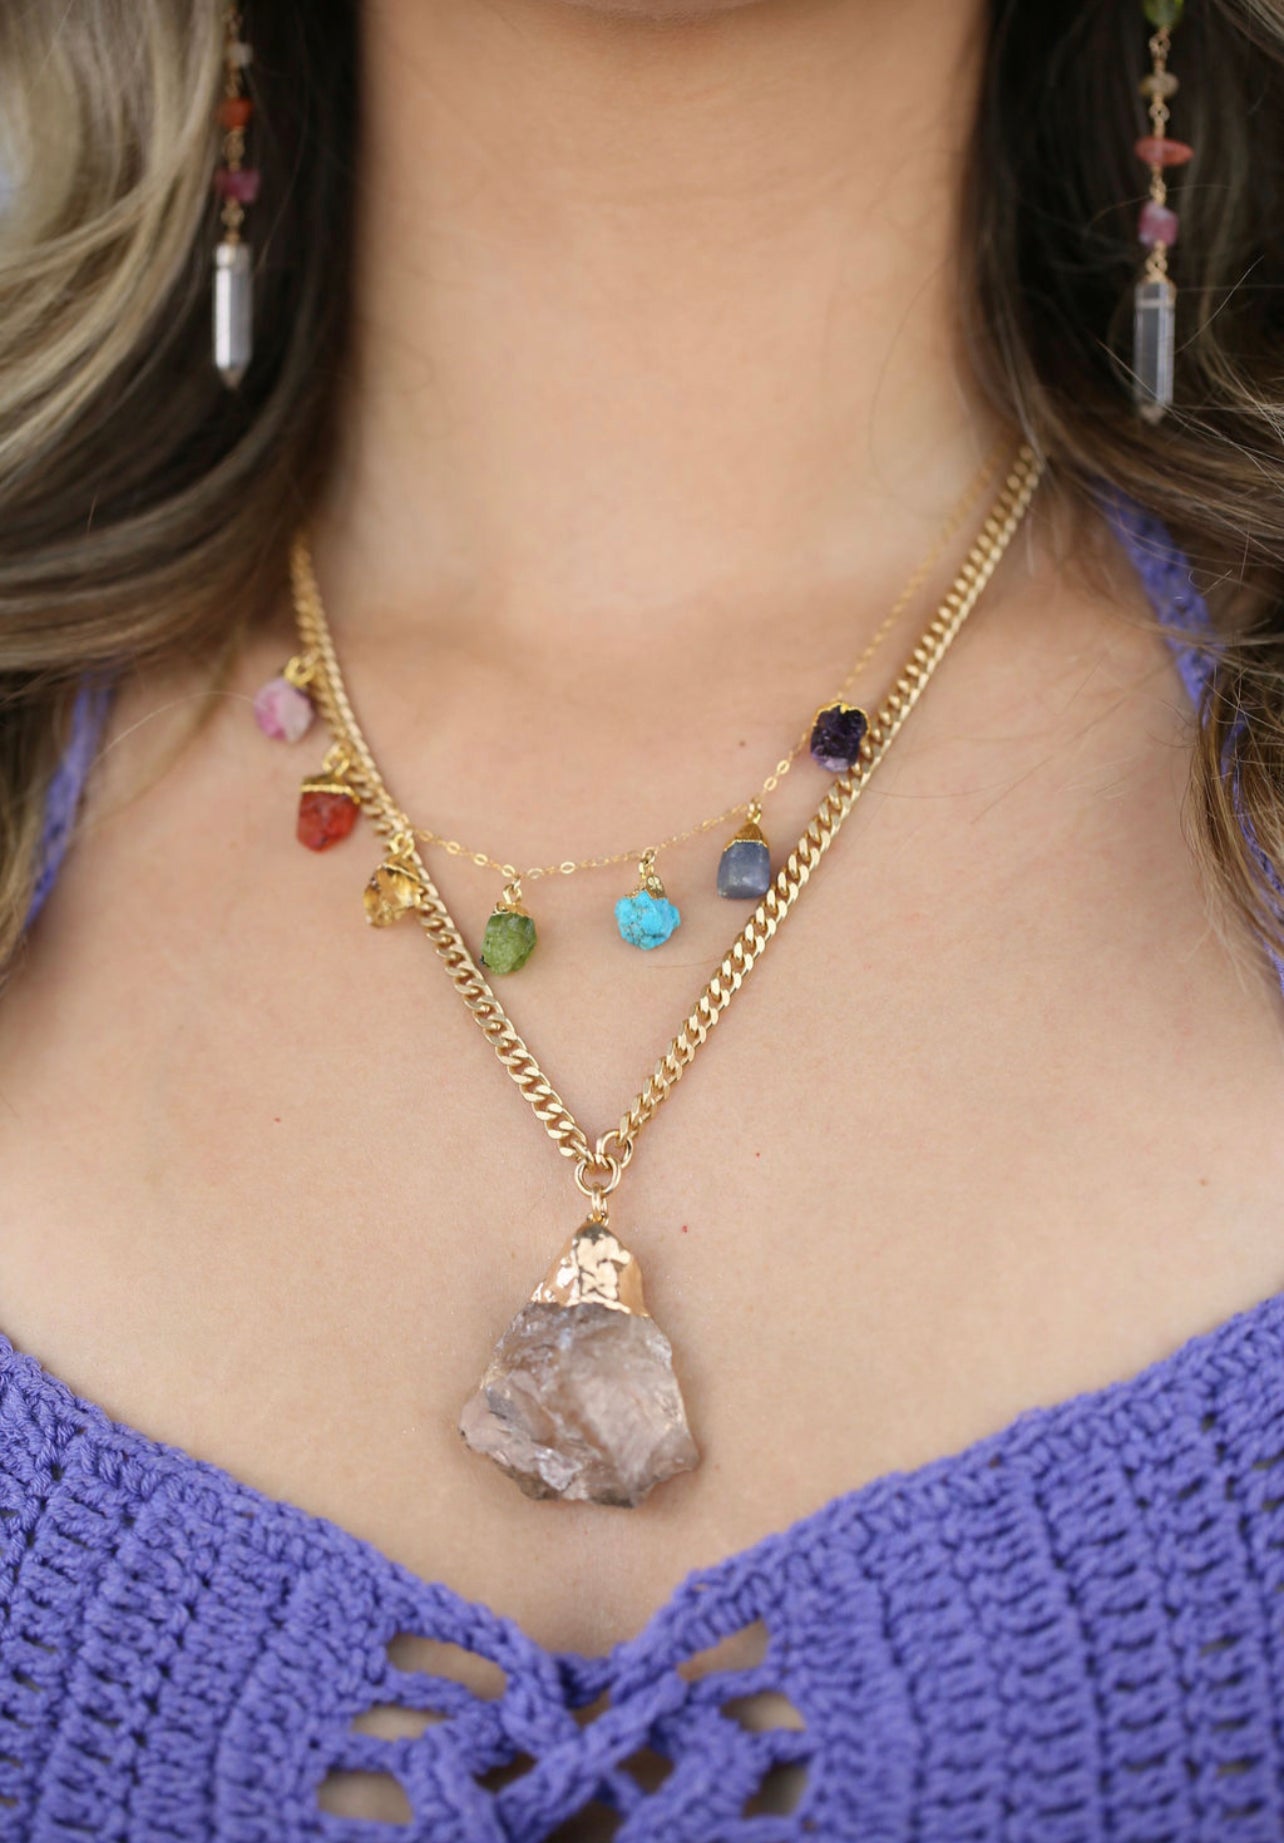 Chakra Stones on Quartz Crystal Point Pendant Necklace - Choose